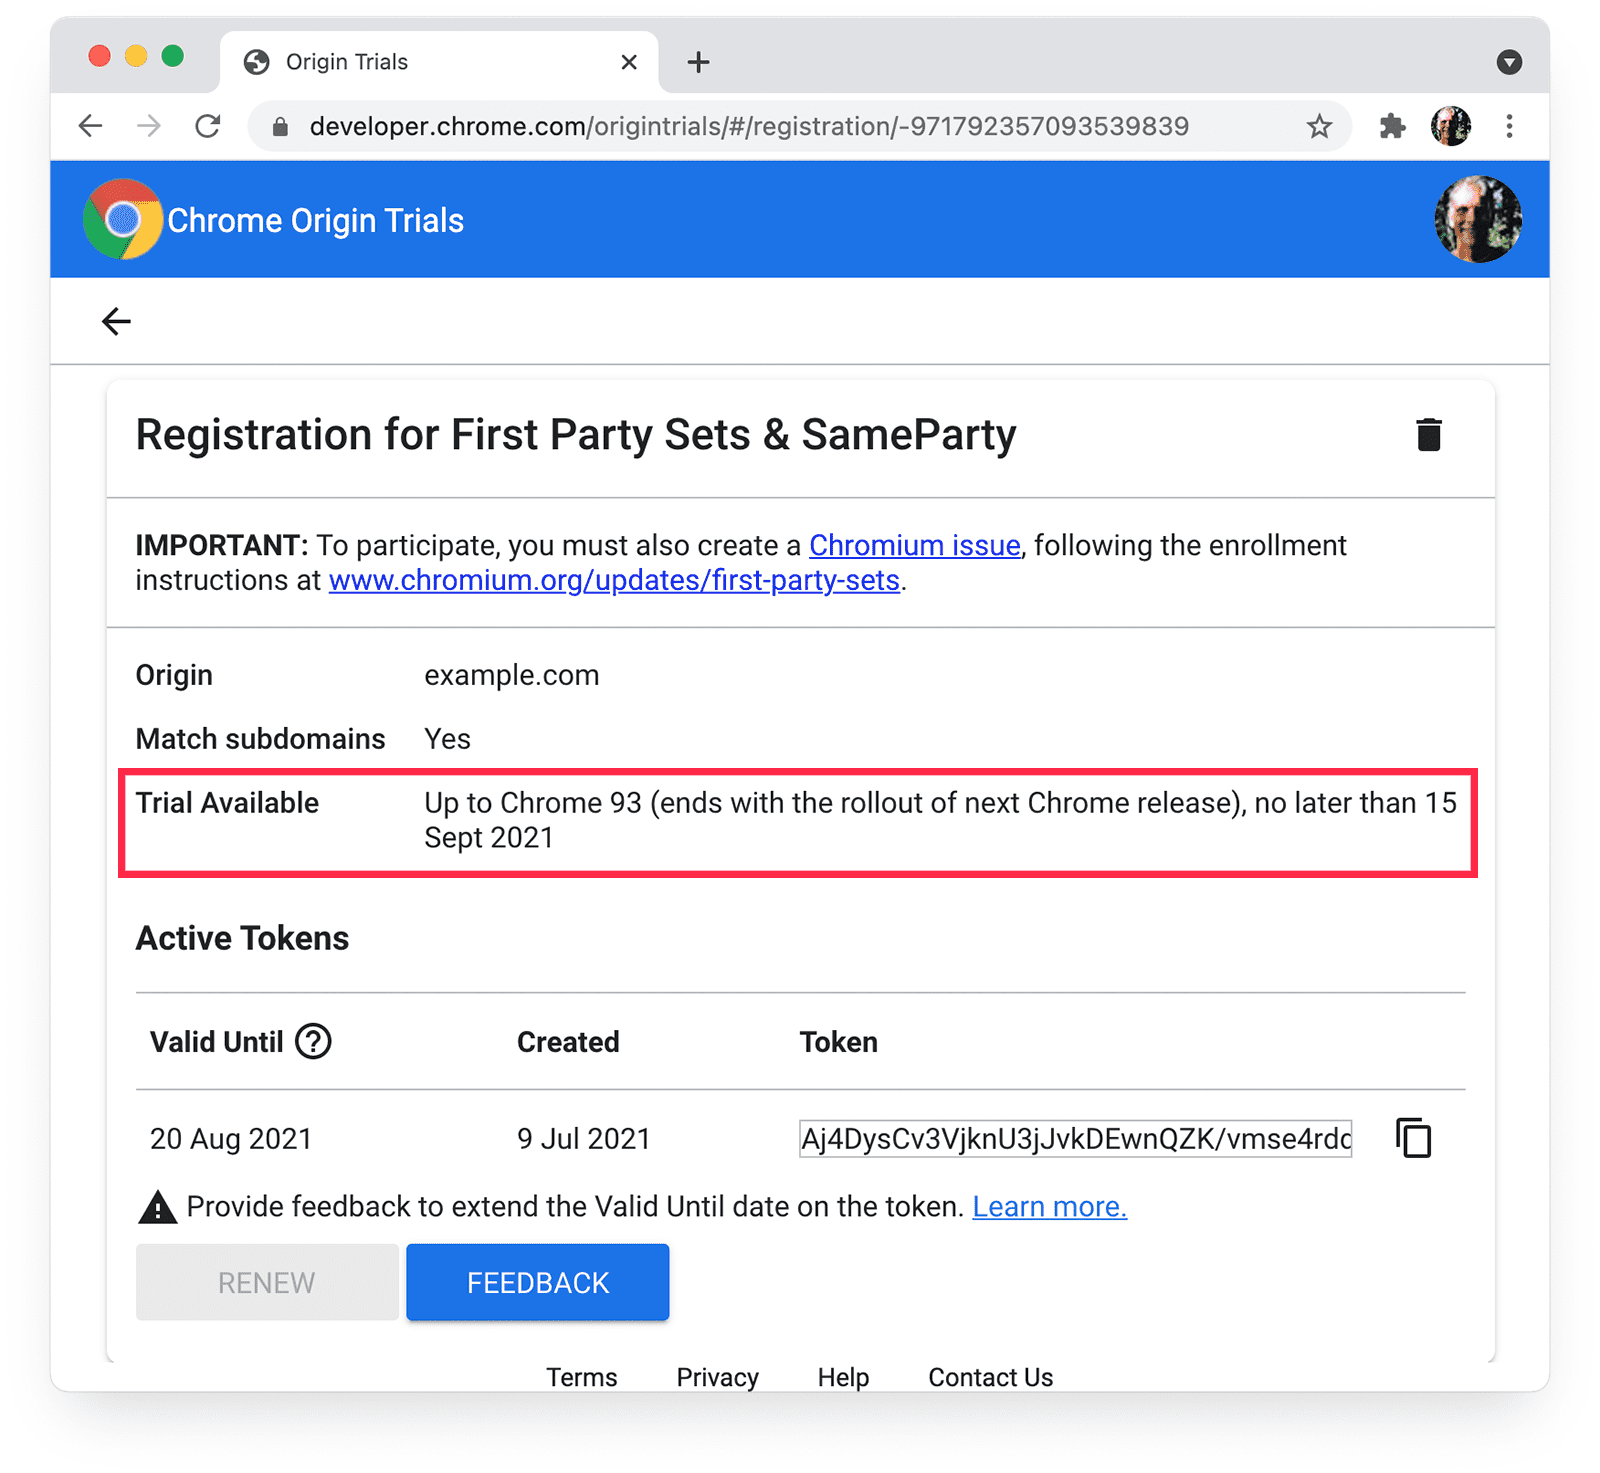 Chrome オリジン トライアル
ファーストパーティ セットと[試用可能] の詳細がハイライト表示された SameParty。